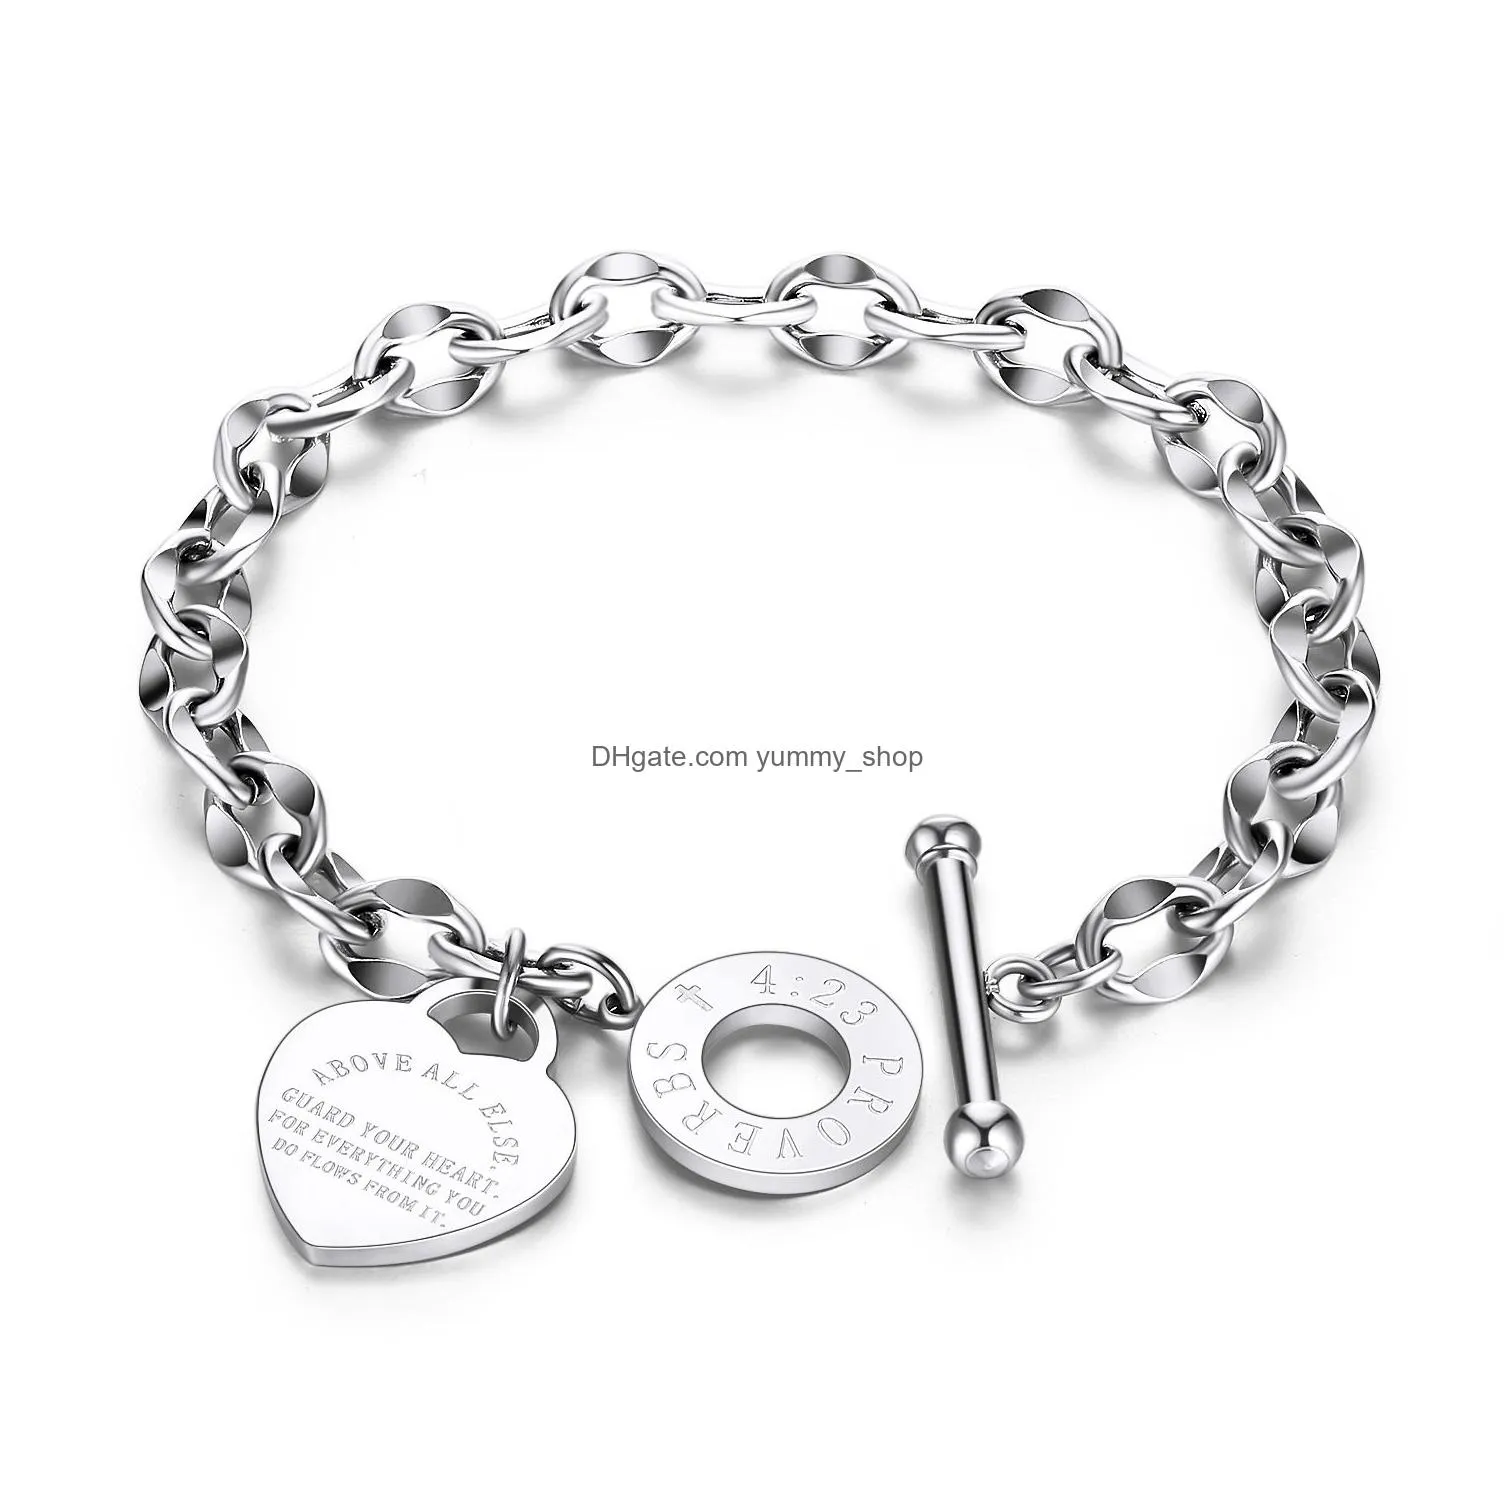 2021 est arrival stainless steel chain bracelets engraved words personalized heart o letter love bible proverbs link bracelet women jewelry